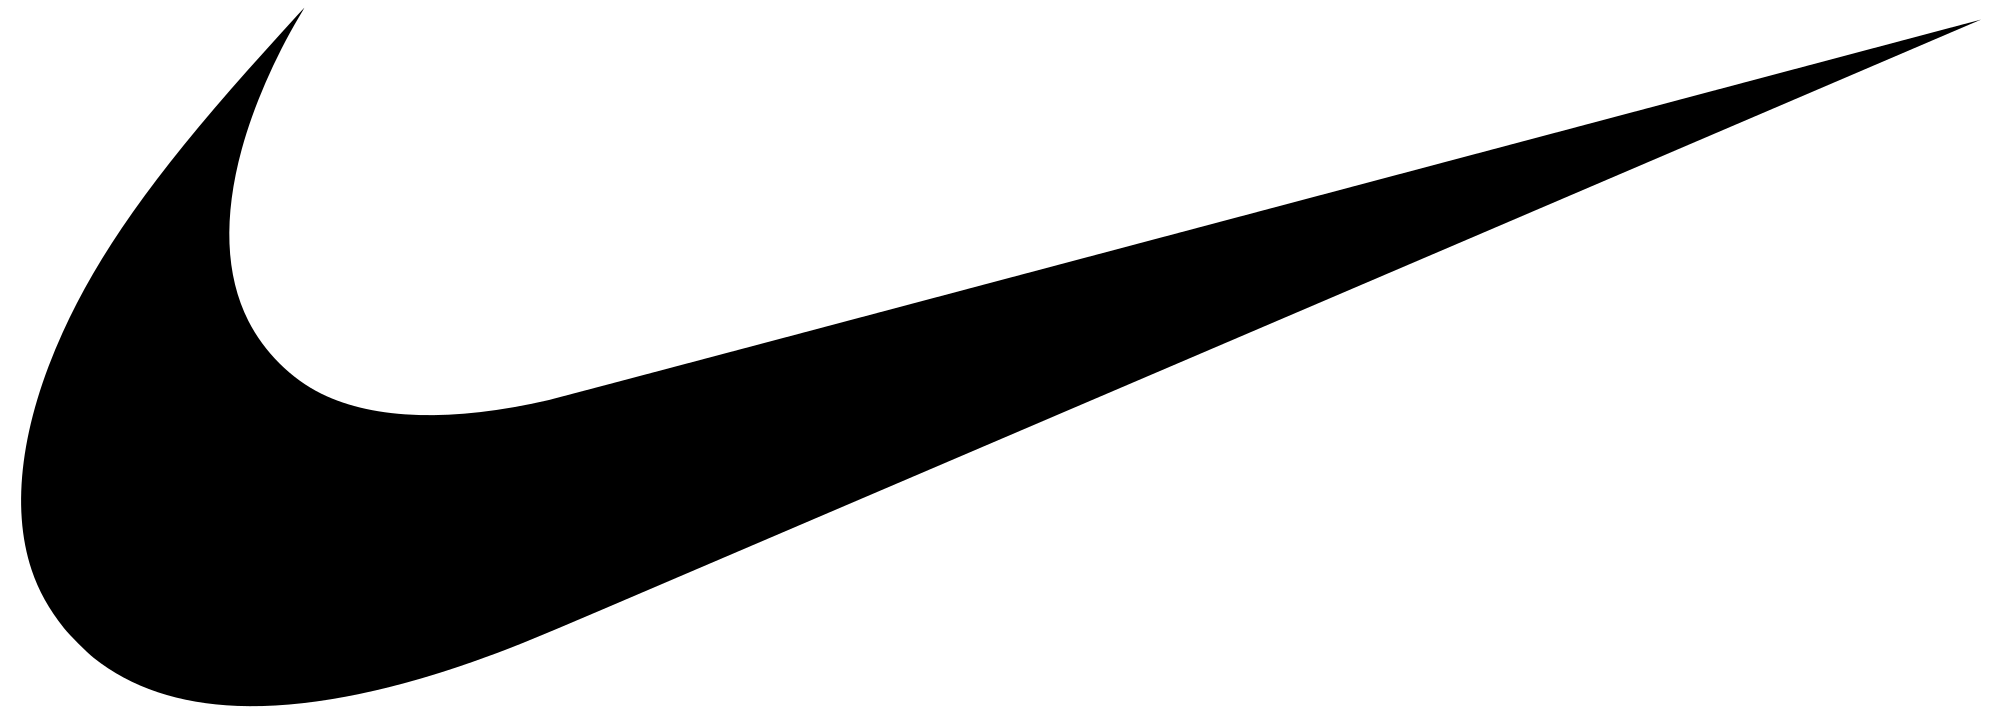 2000px-Logo_NIKE.svg.png